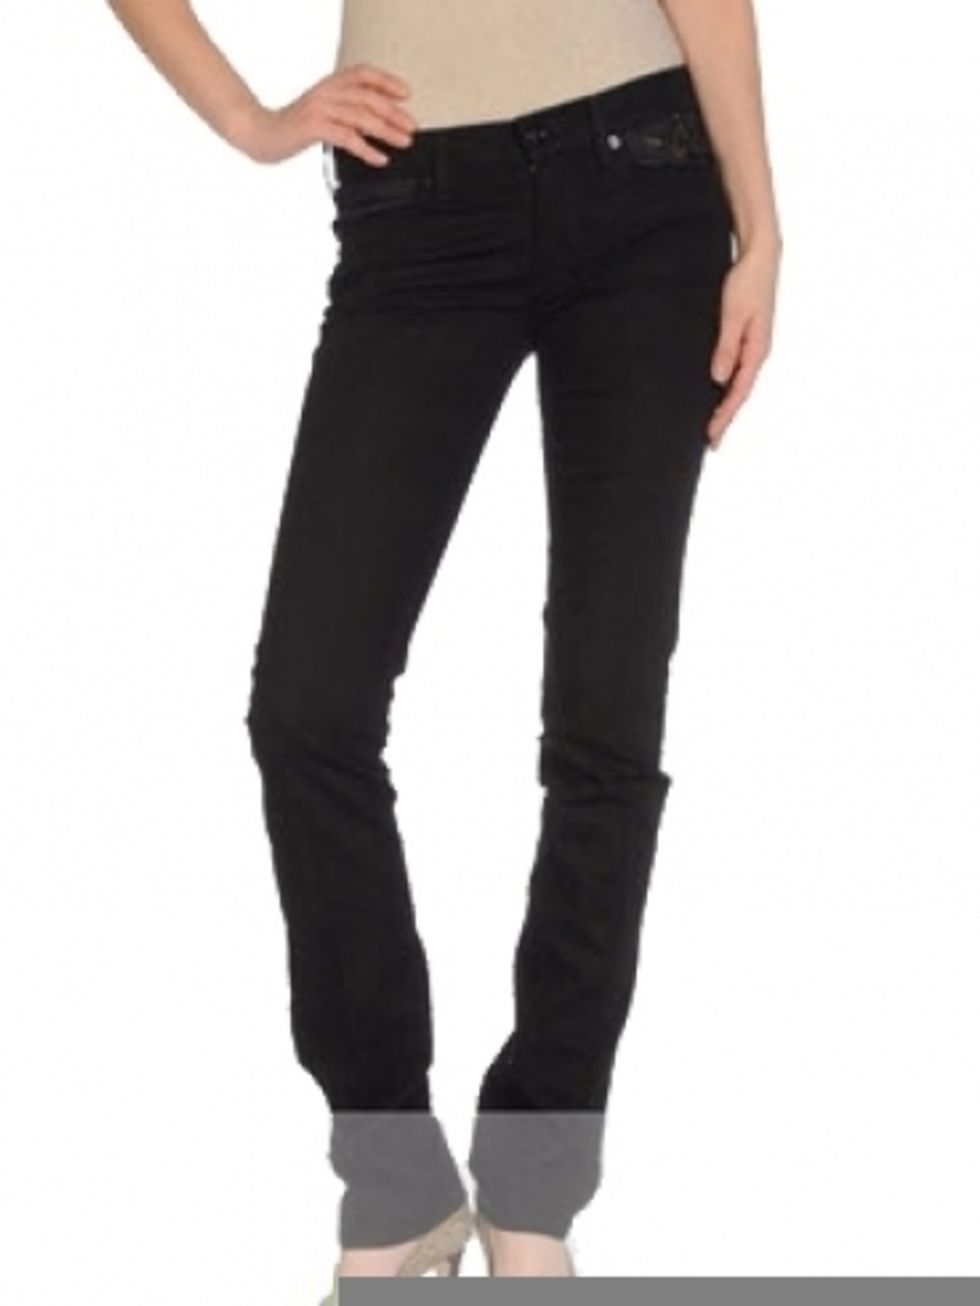 Leg, Product, Brown, Trousers, Denim, Jeans, Textile, Standing, Joint, Human leg, 